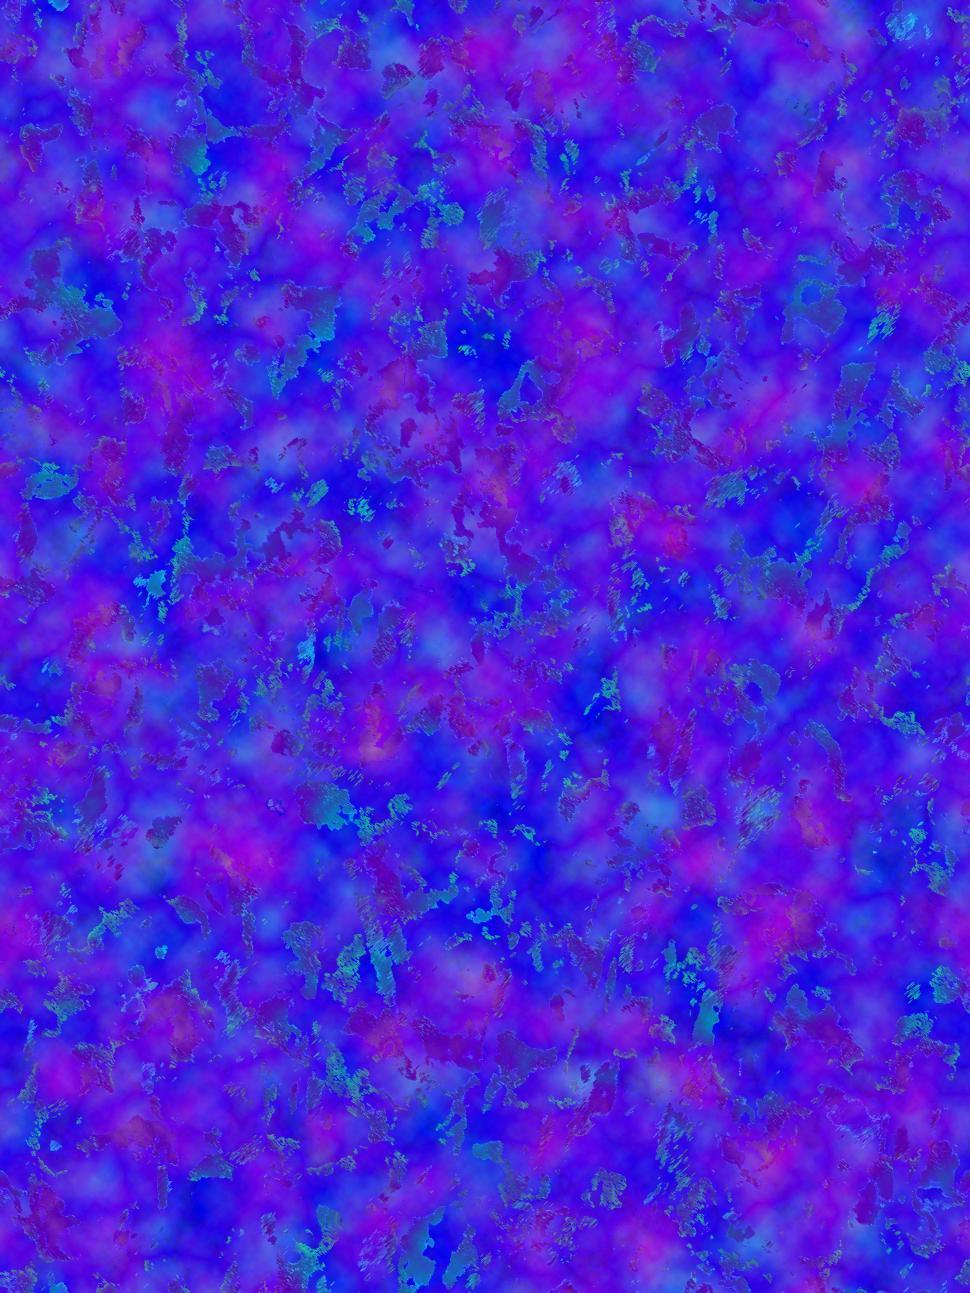 Free Image of Pink Blue Digital Background - Wallpaper 